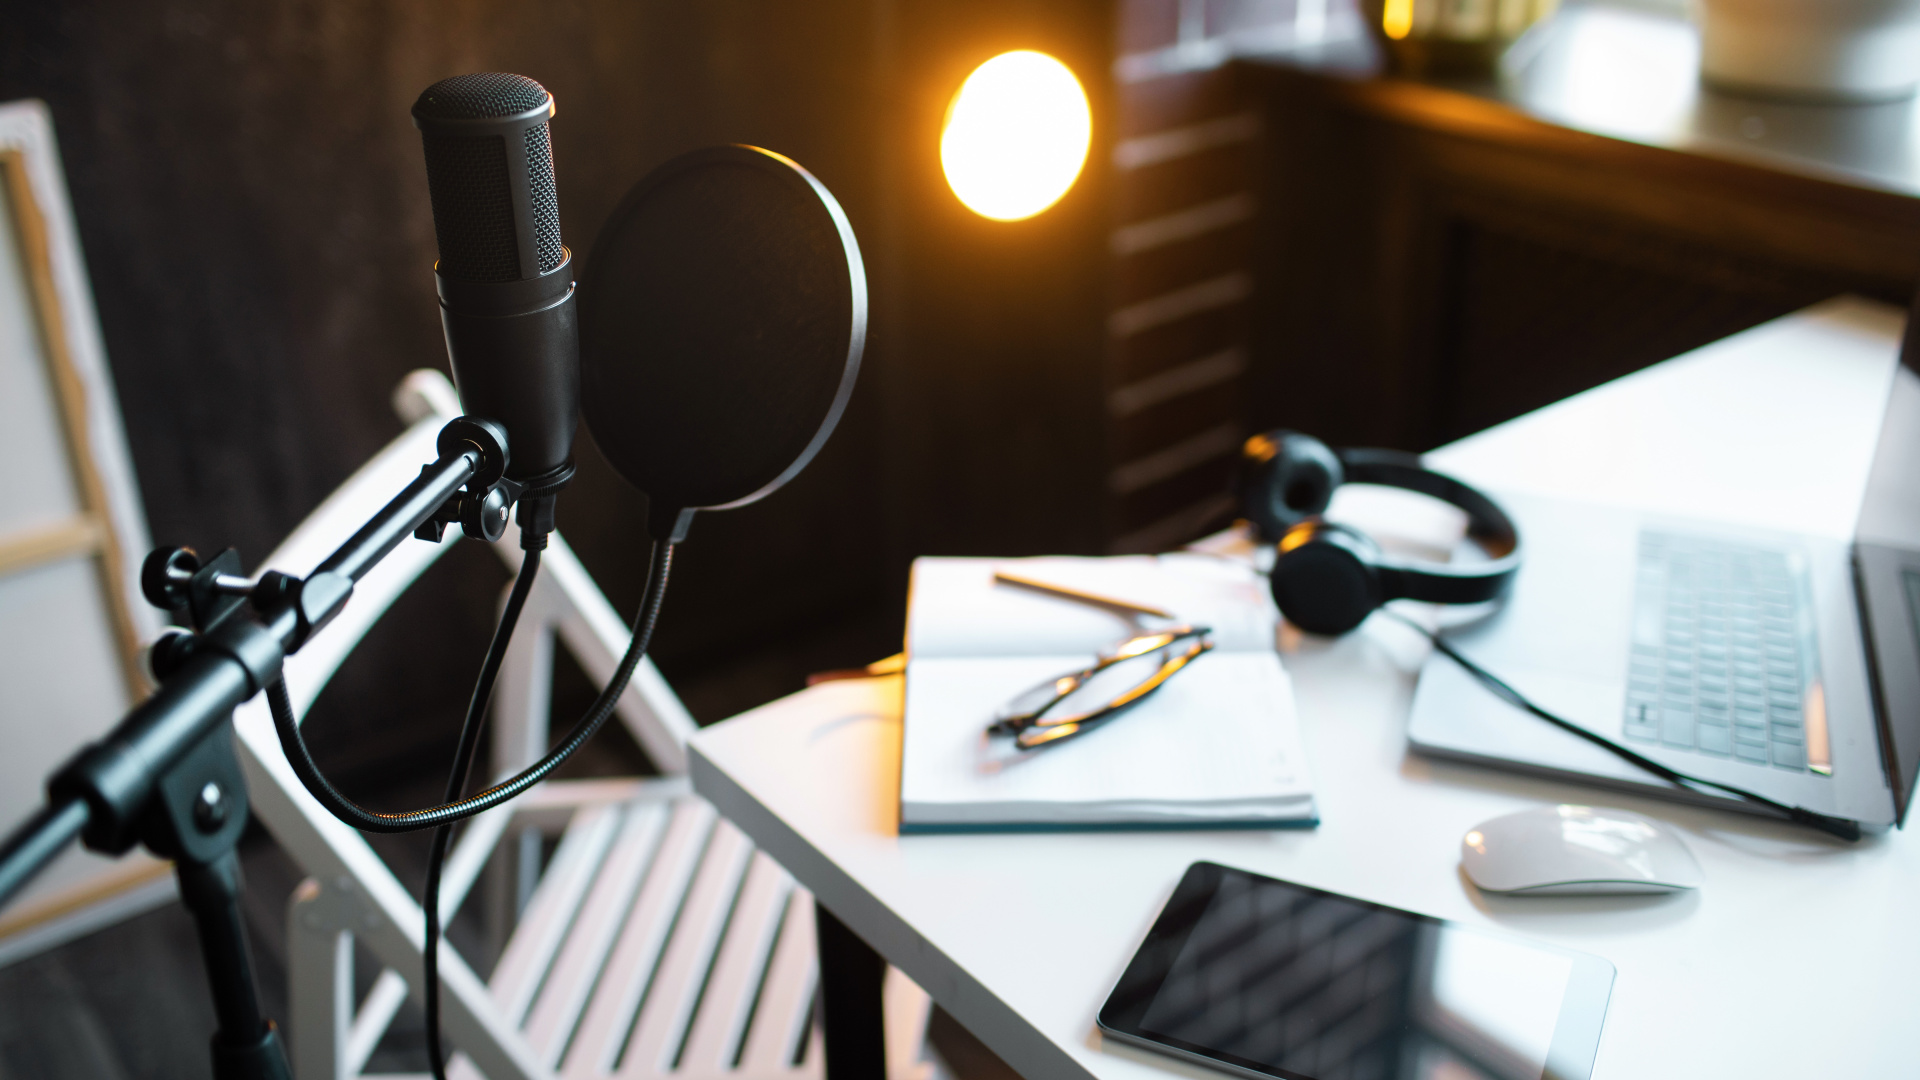 Microphone in a home recording studio